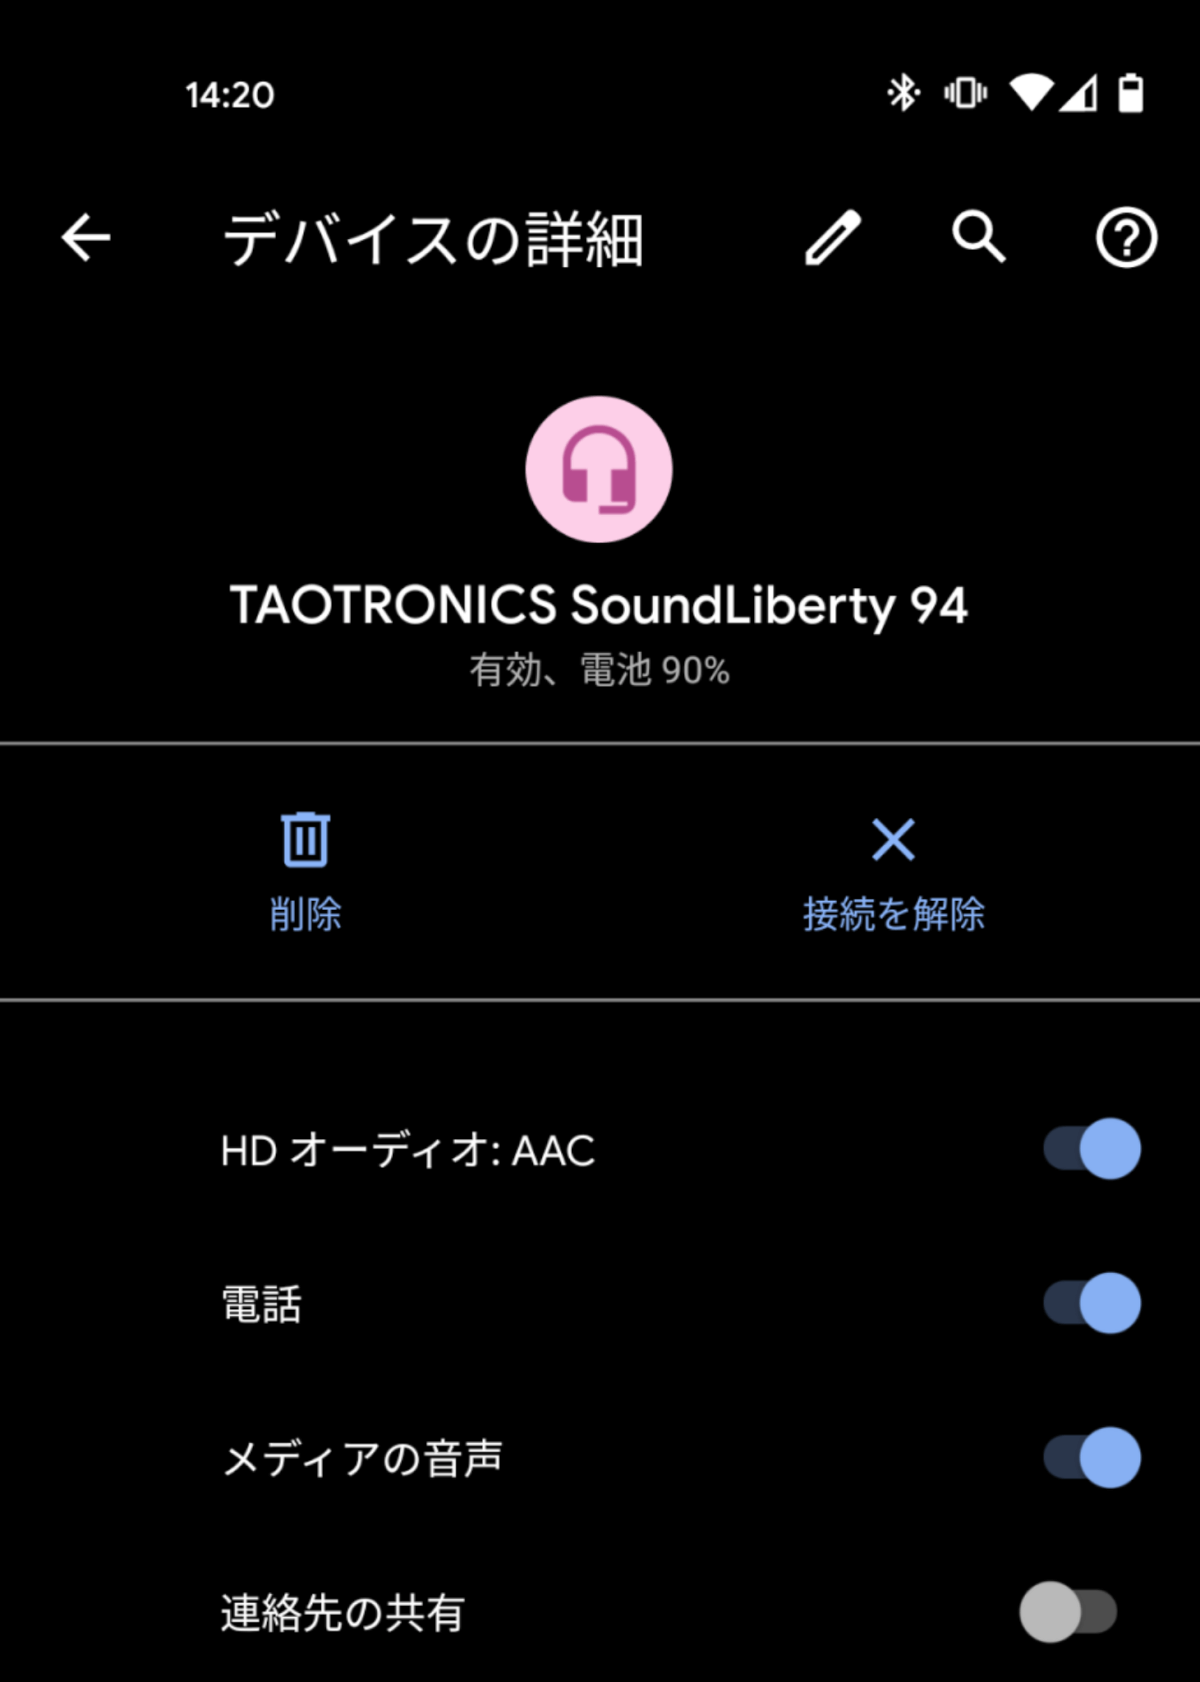 TaoTronics SoundLiberty 94 Androidスマホとペアリング・AAC接続した様子